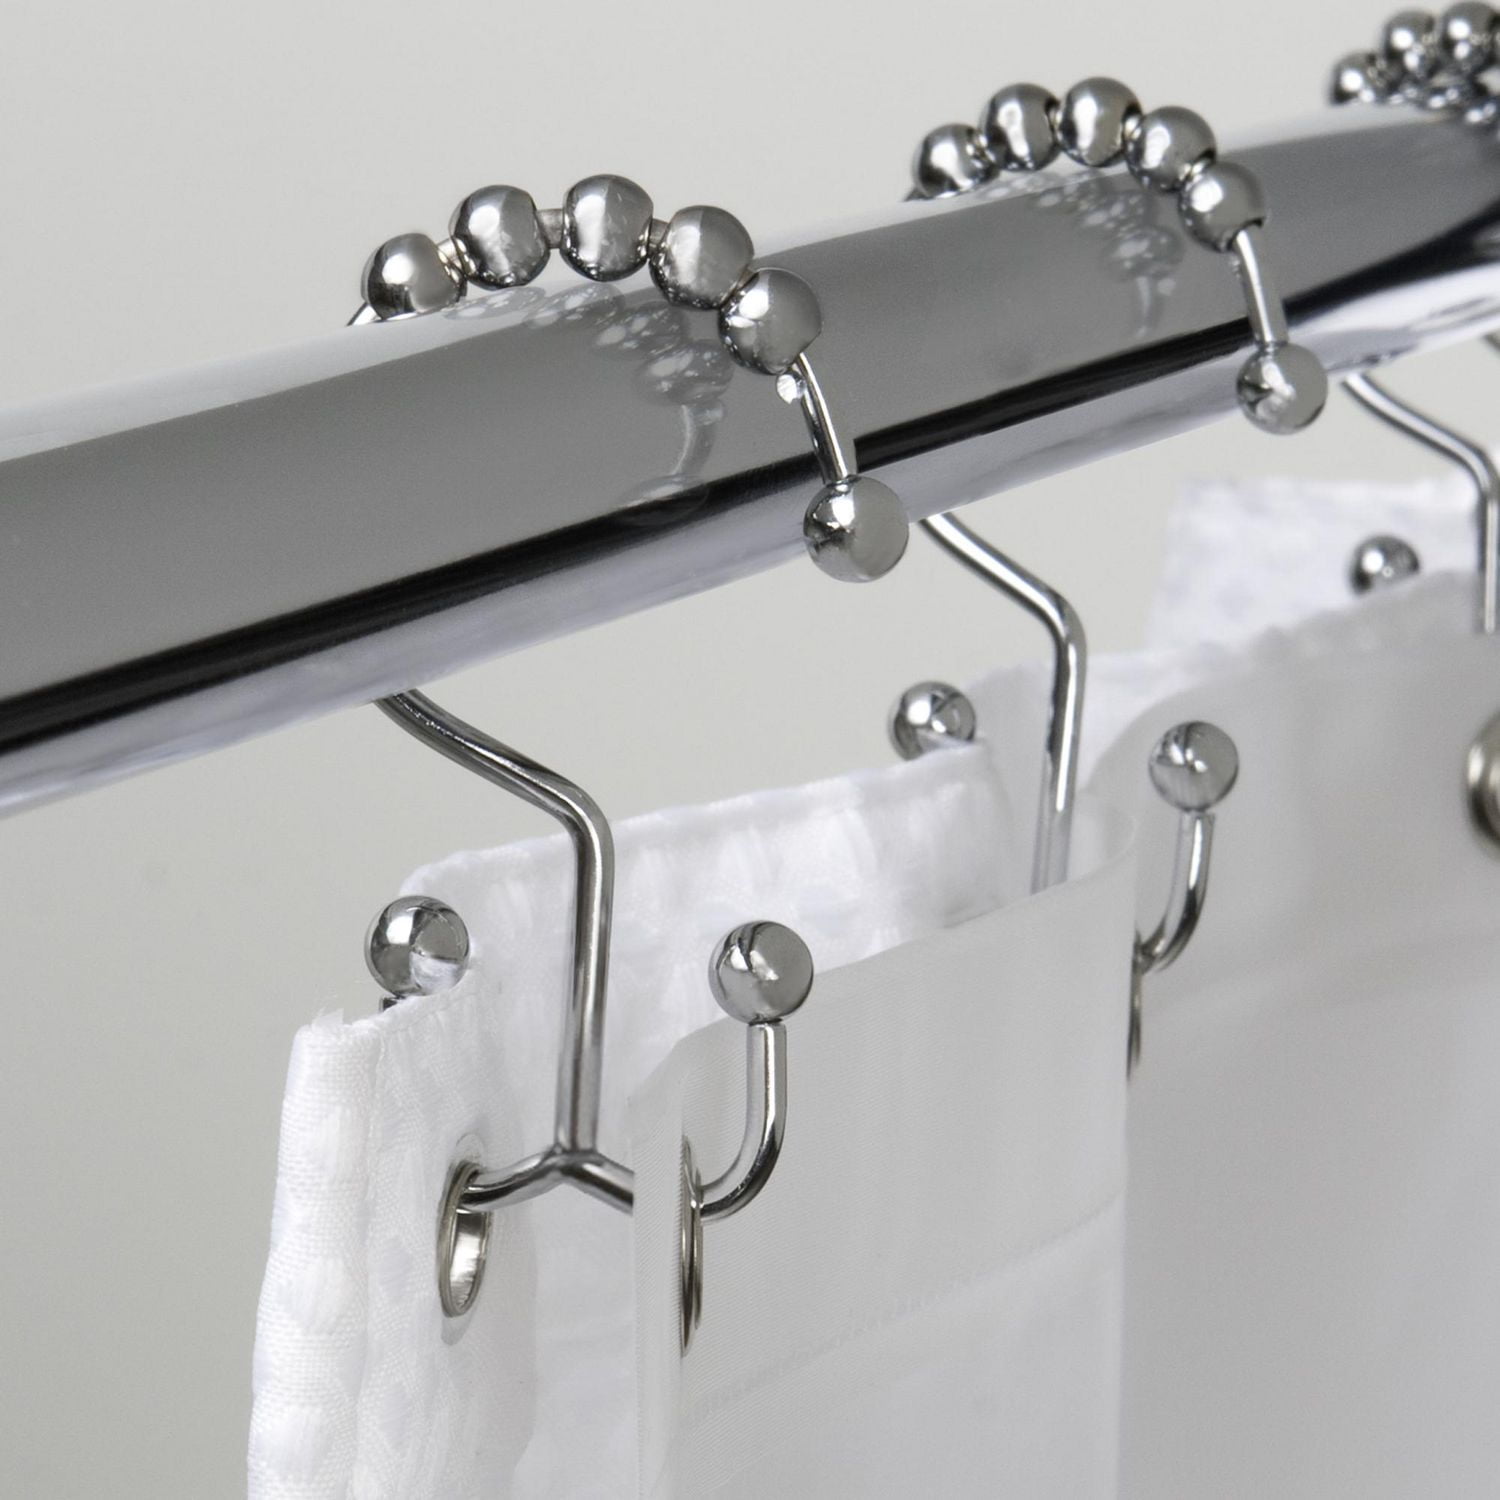  MVSUTA Madamoiselle Decorative Starfish Shower Curtain  Hooks,Roller Ring Balls Designed Hooks for Bathroom Curtains,Set of 12 :  Home & Kitchen